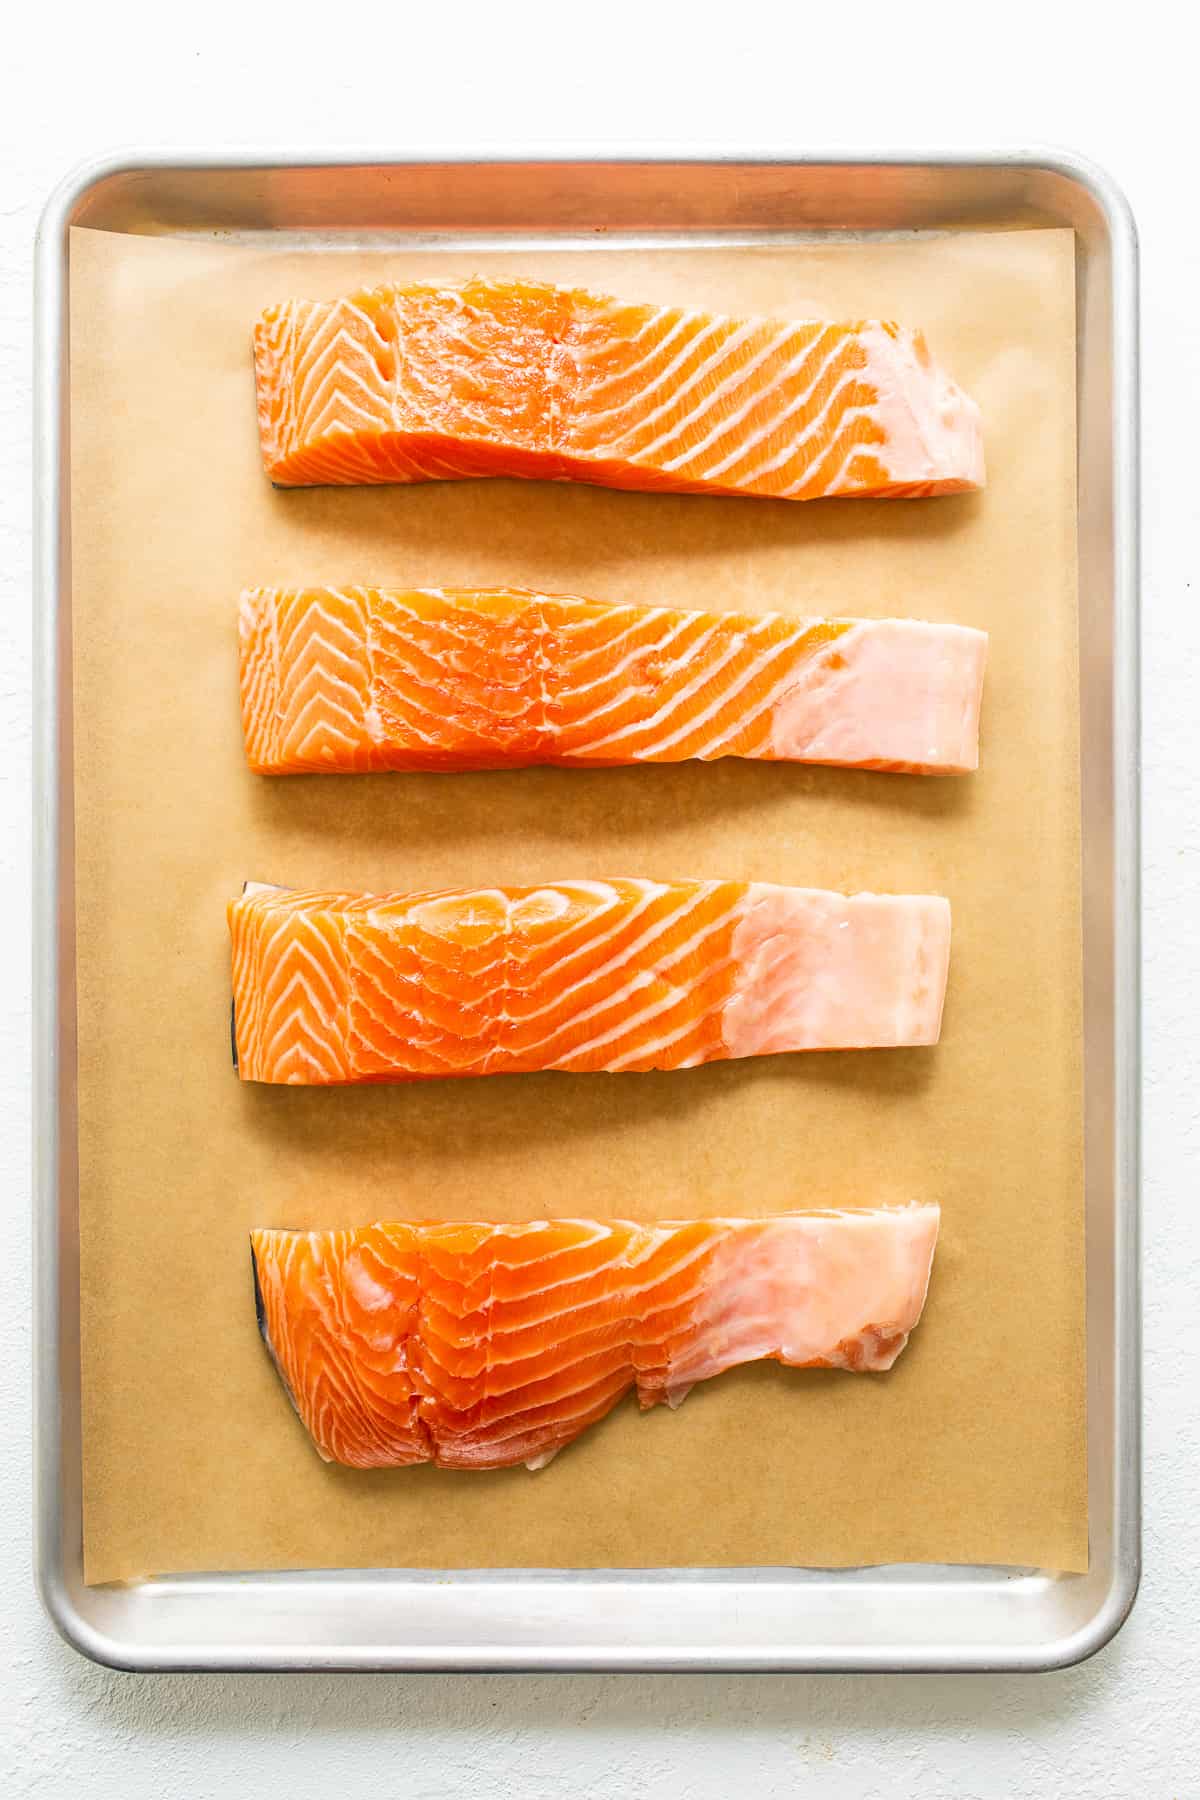 Raw salmon filets on a baking sheet. 